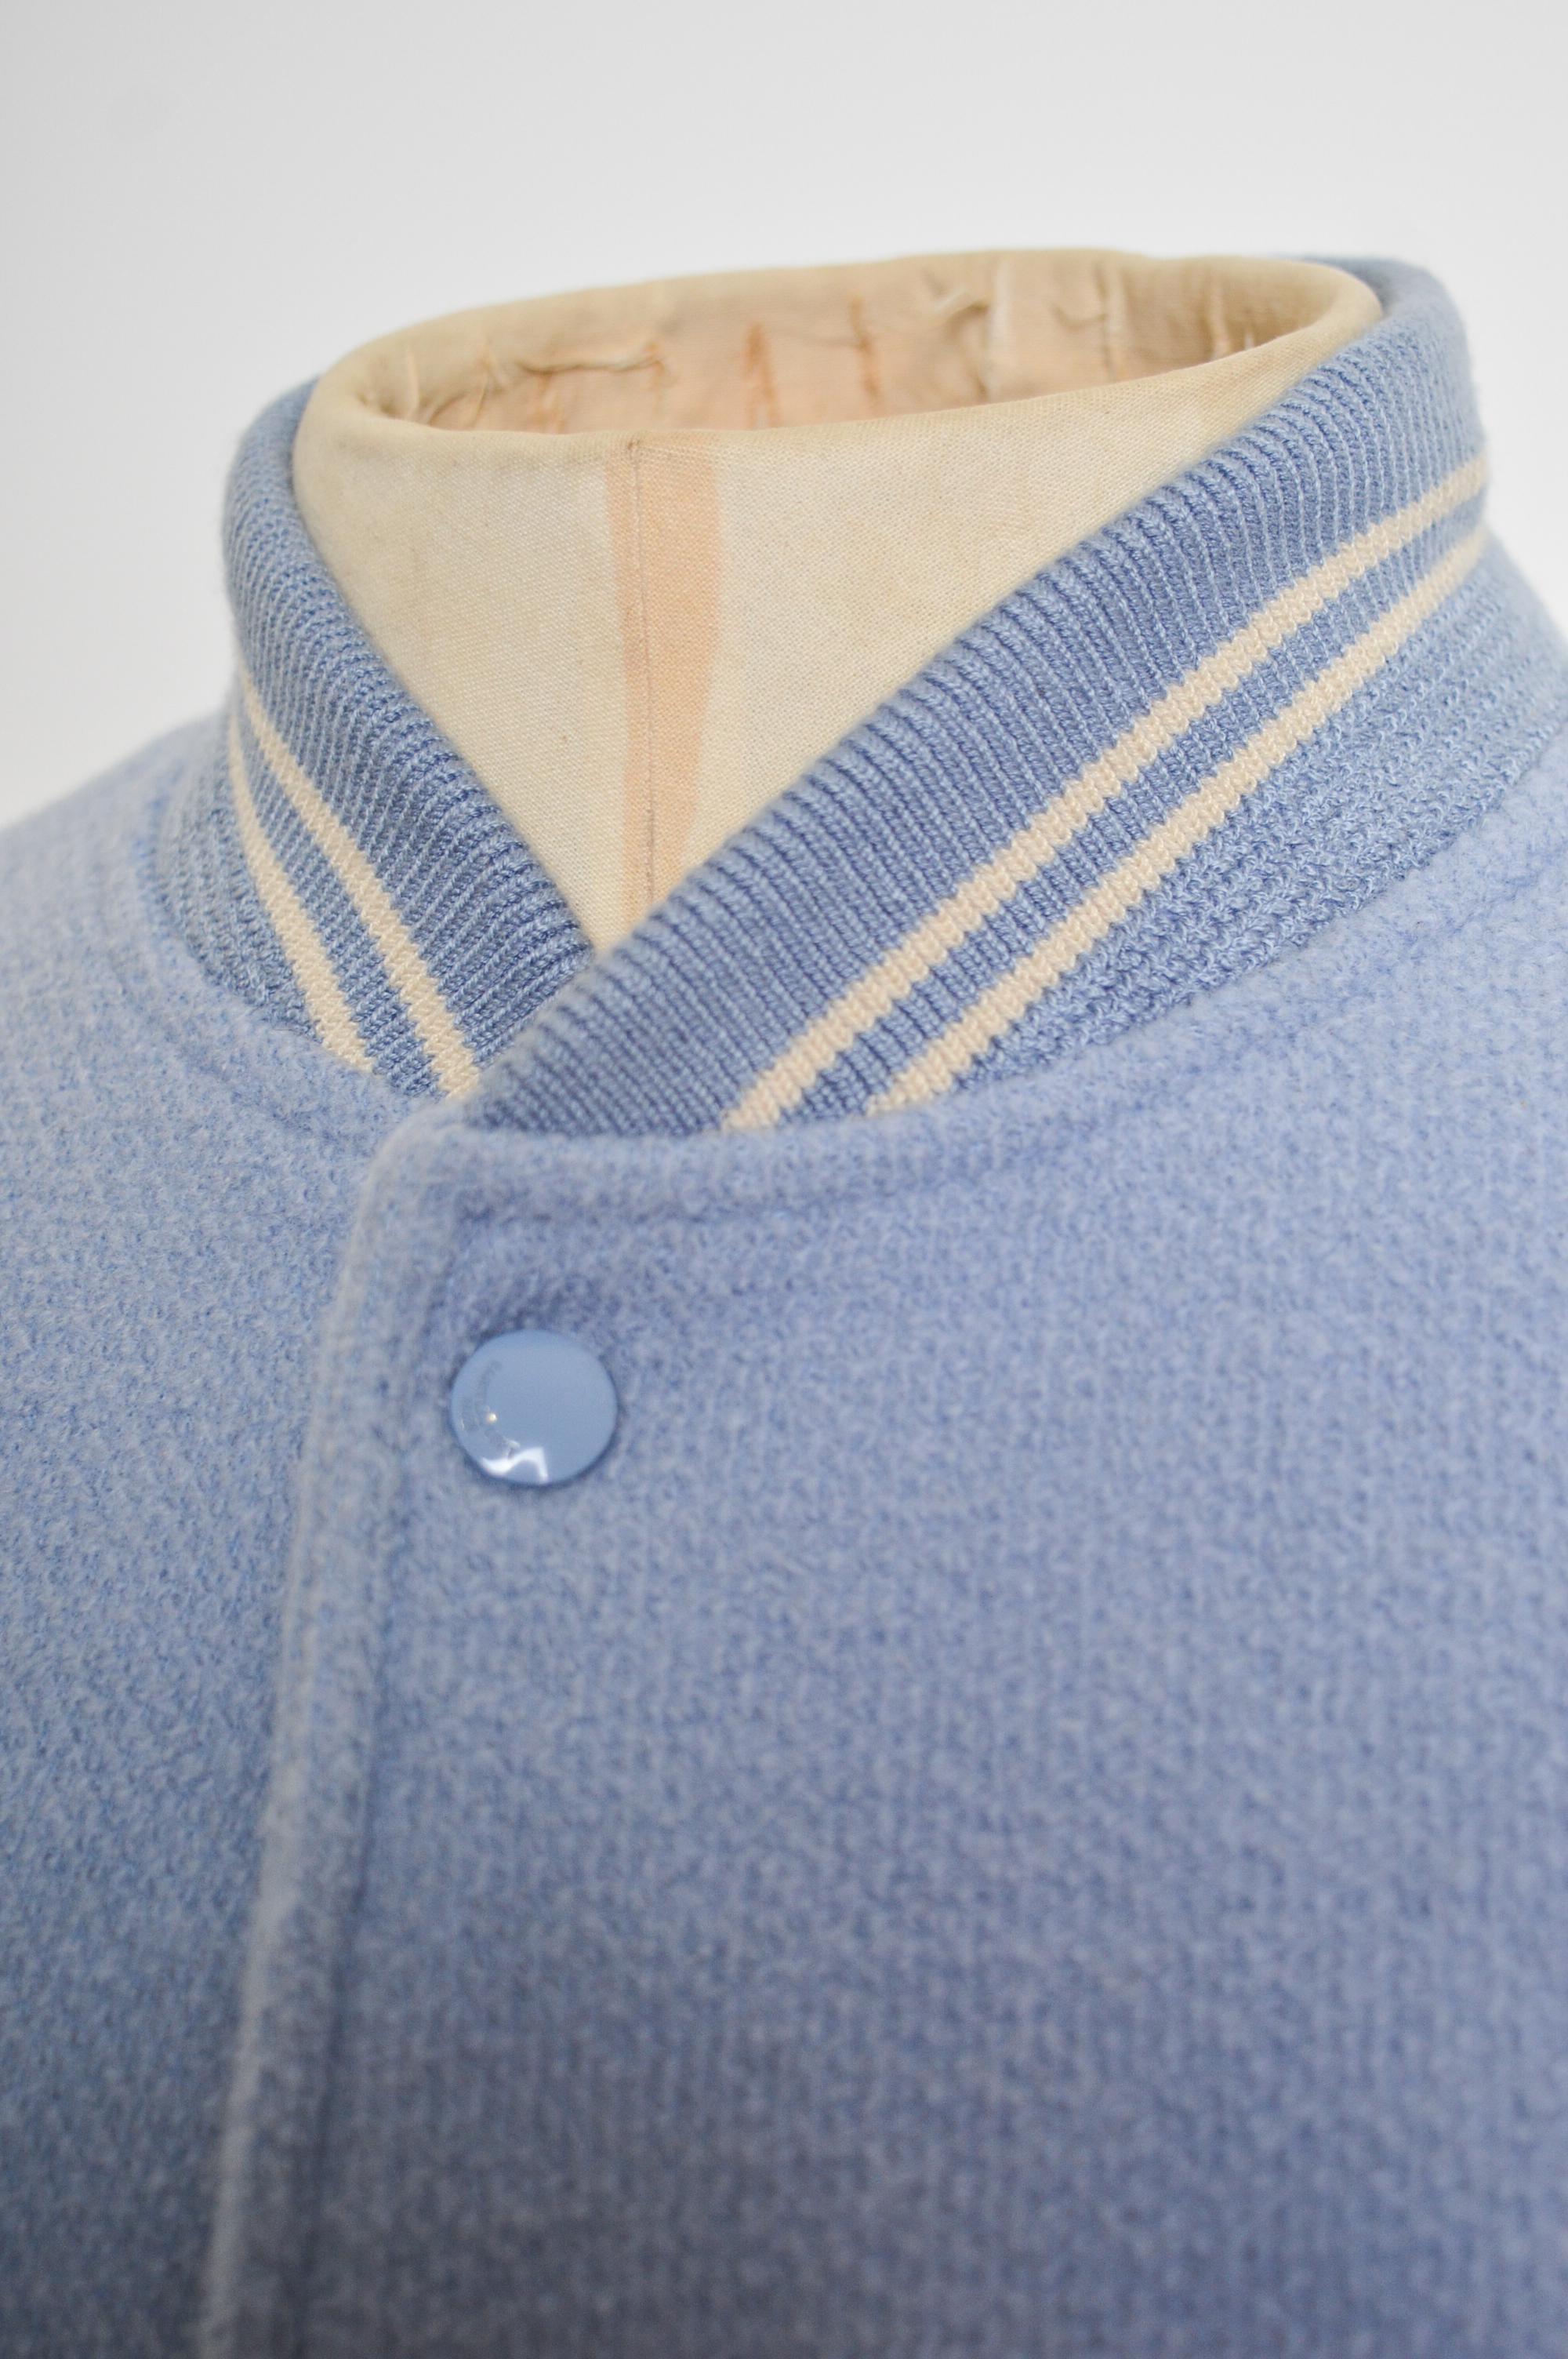 SS 2016 Saint Laurent Teddy Baby Blue Wool Varsity Bomber Jacket For Sale 5